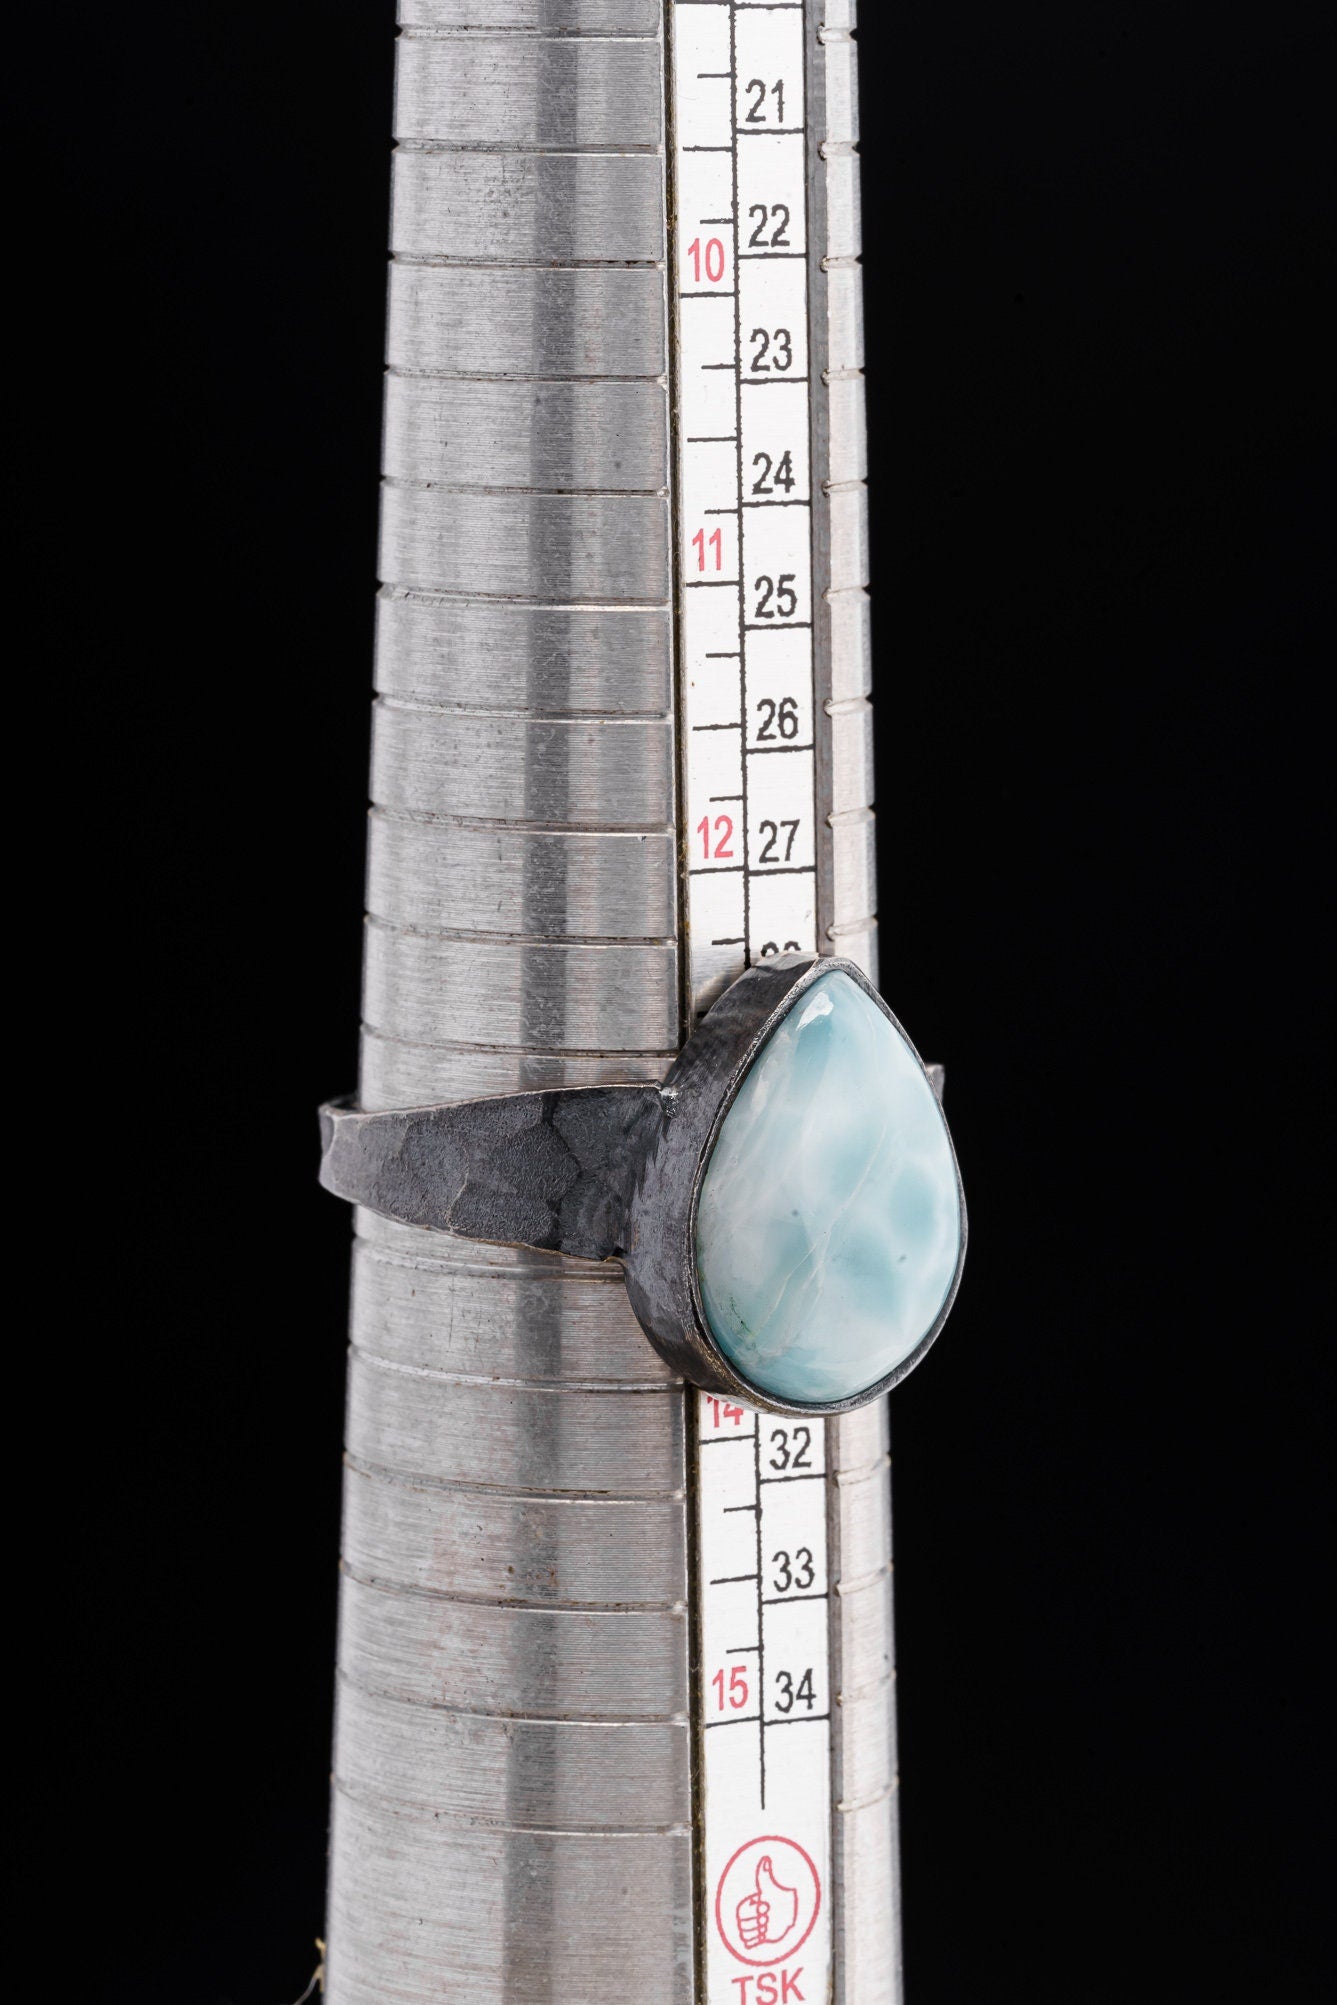 Tear Drop Larimar Cabochon - Men's/Unisex Large Crystal Ring - Size 13 US - 925 Sterling Silver - Hammer Textured & Oxidised